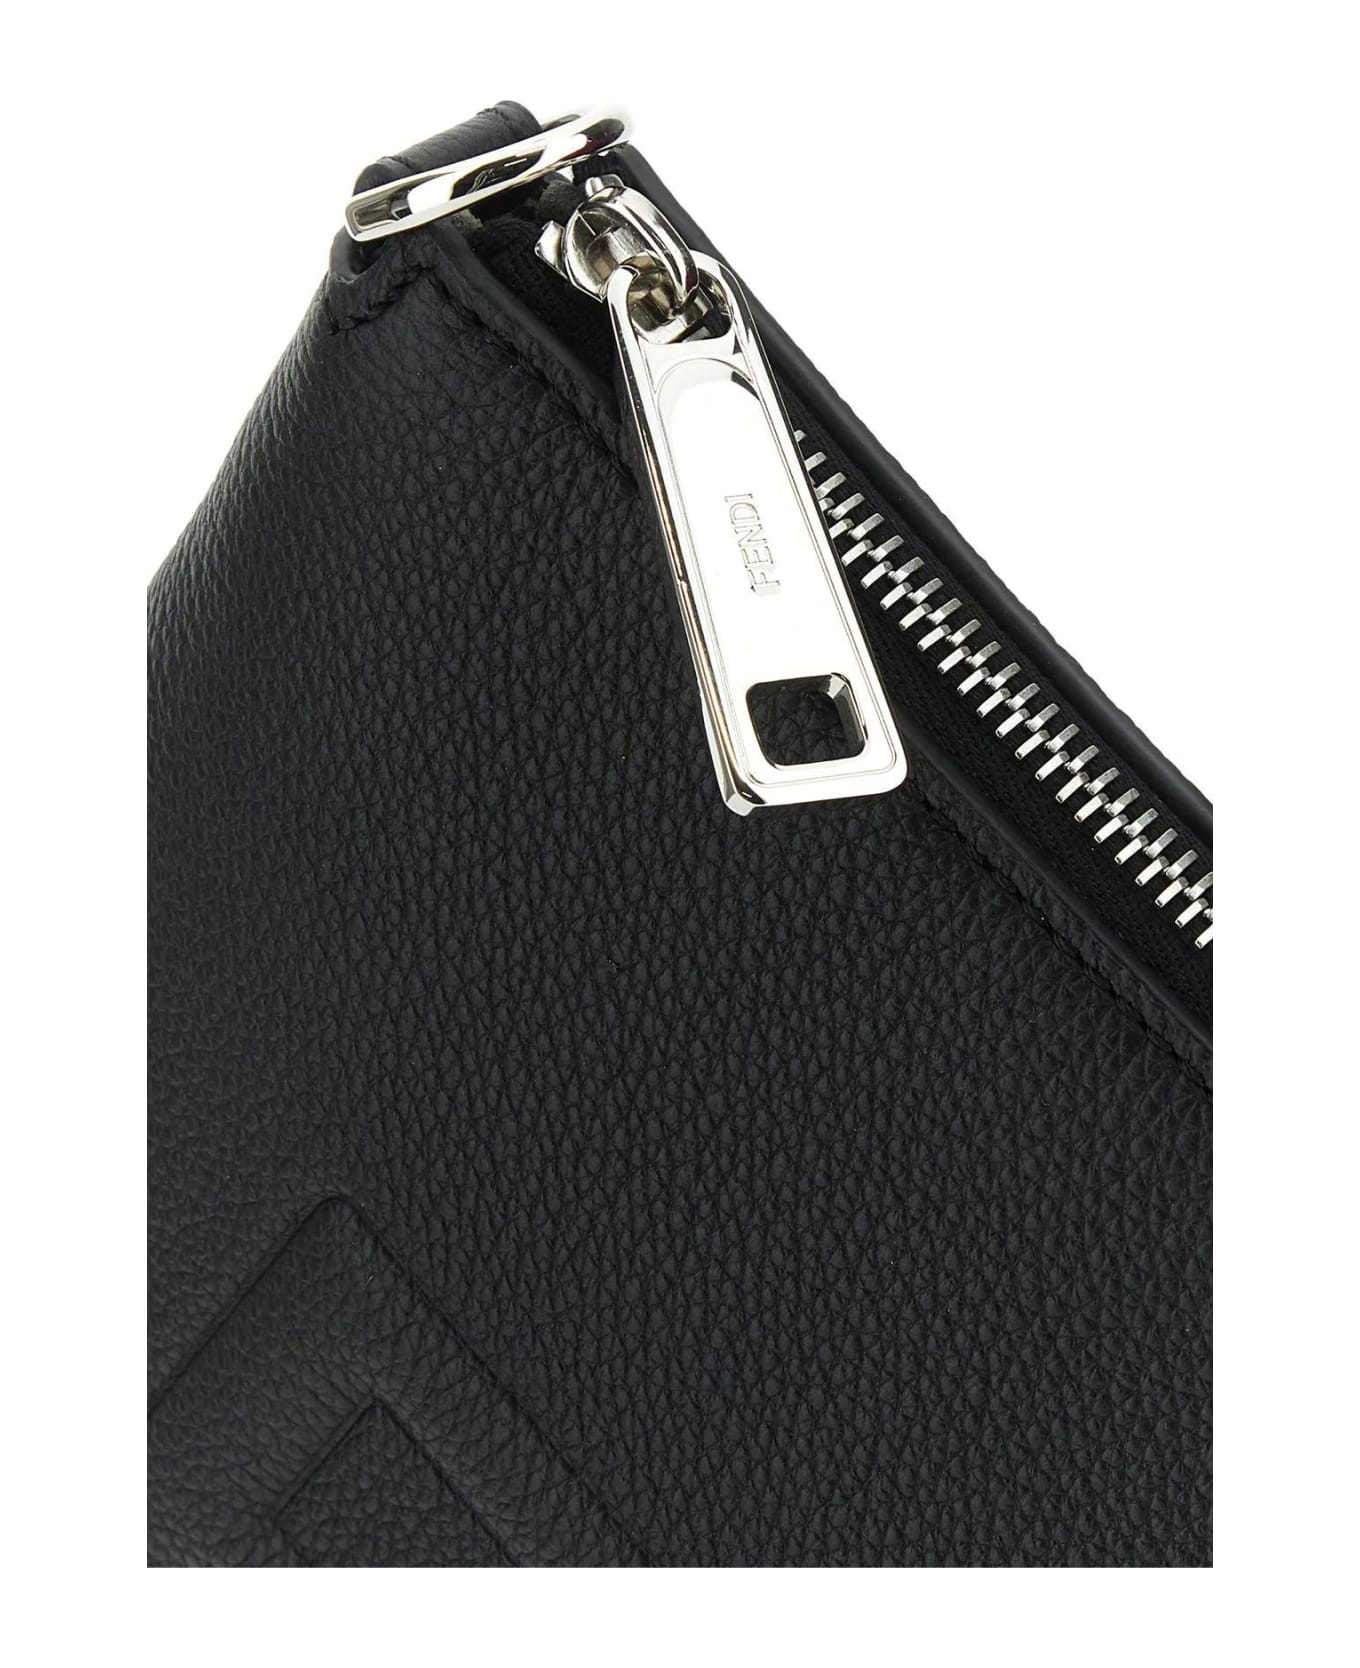 Fendi Black Leather Fendi Roma Shoulder Bag - Black クラッチバッグ